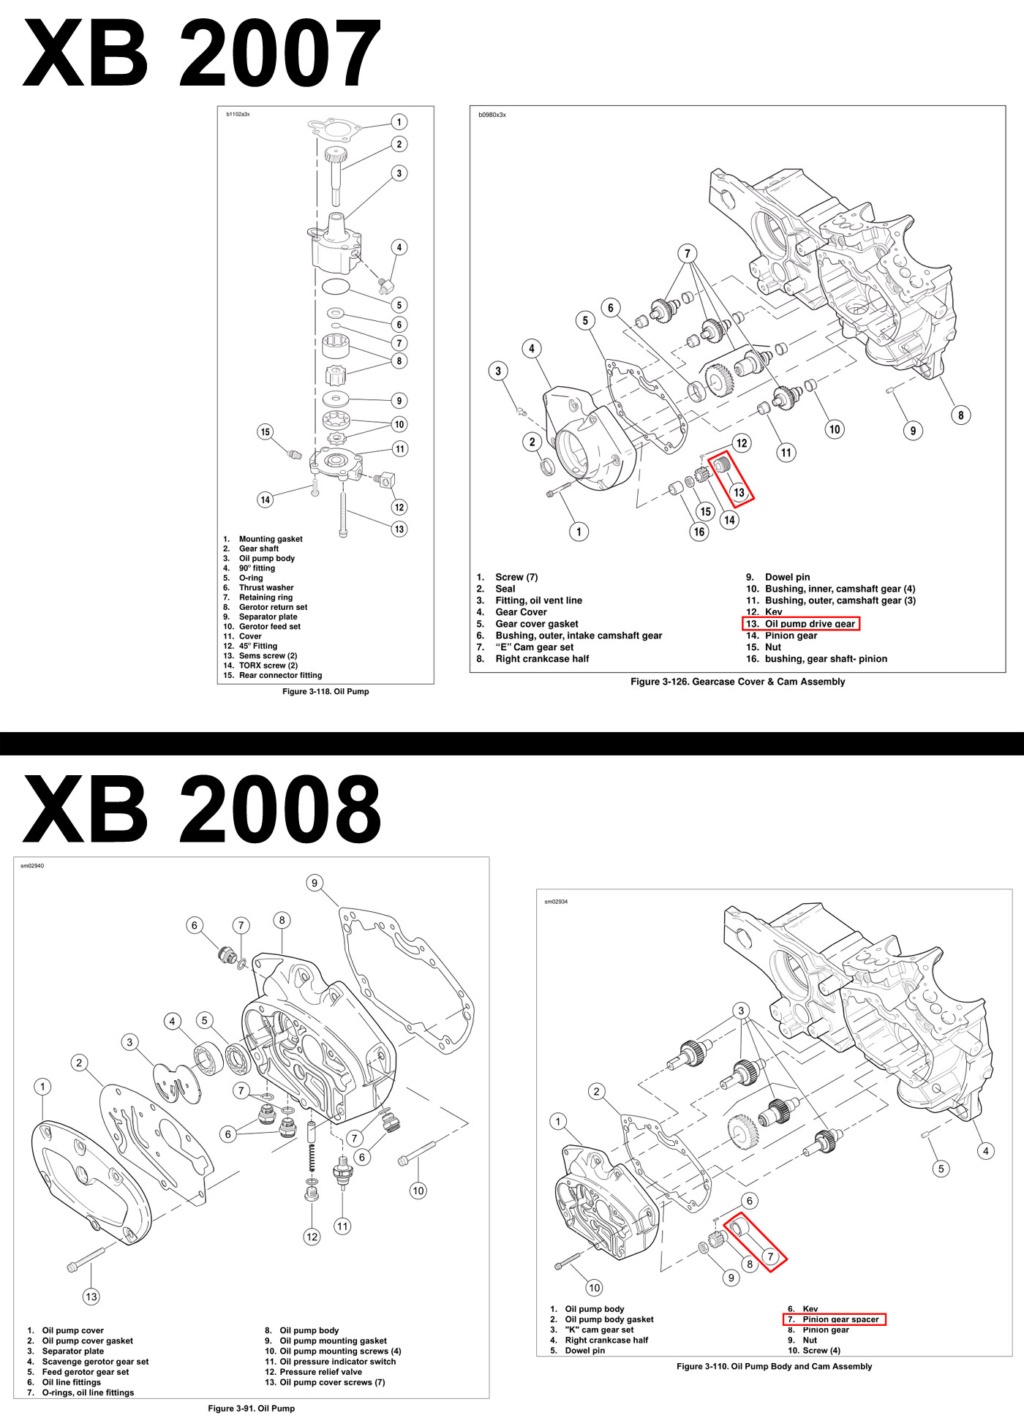 [XB] - PPH post 2007 2007vs10